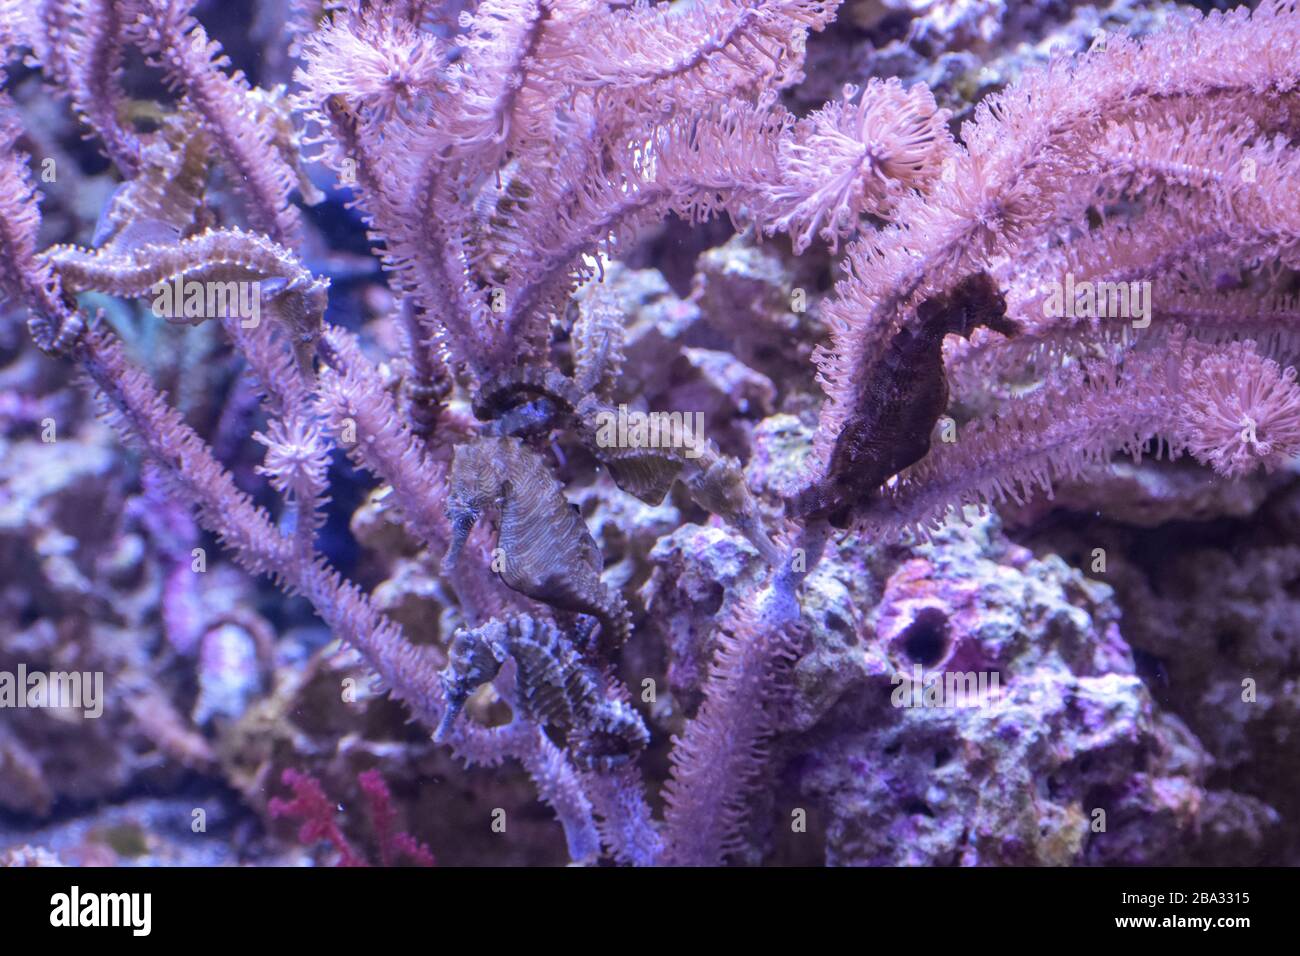 Aquarium Fish tank, Purple Coral, Seahorse and Fish Stock Photo